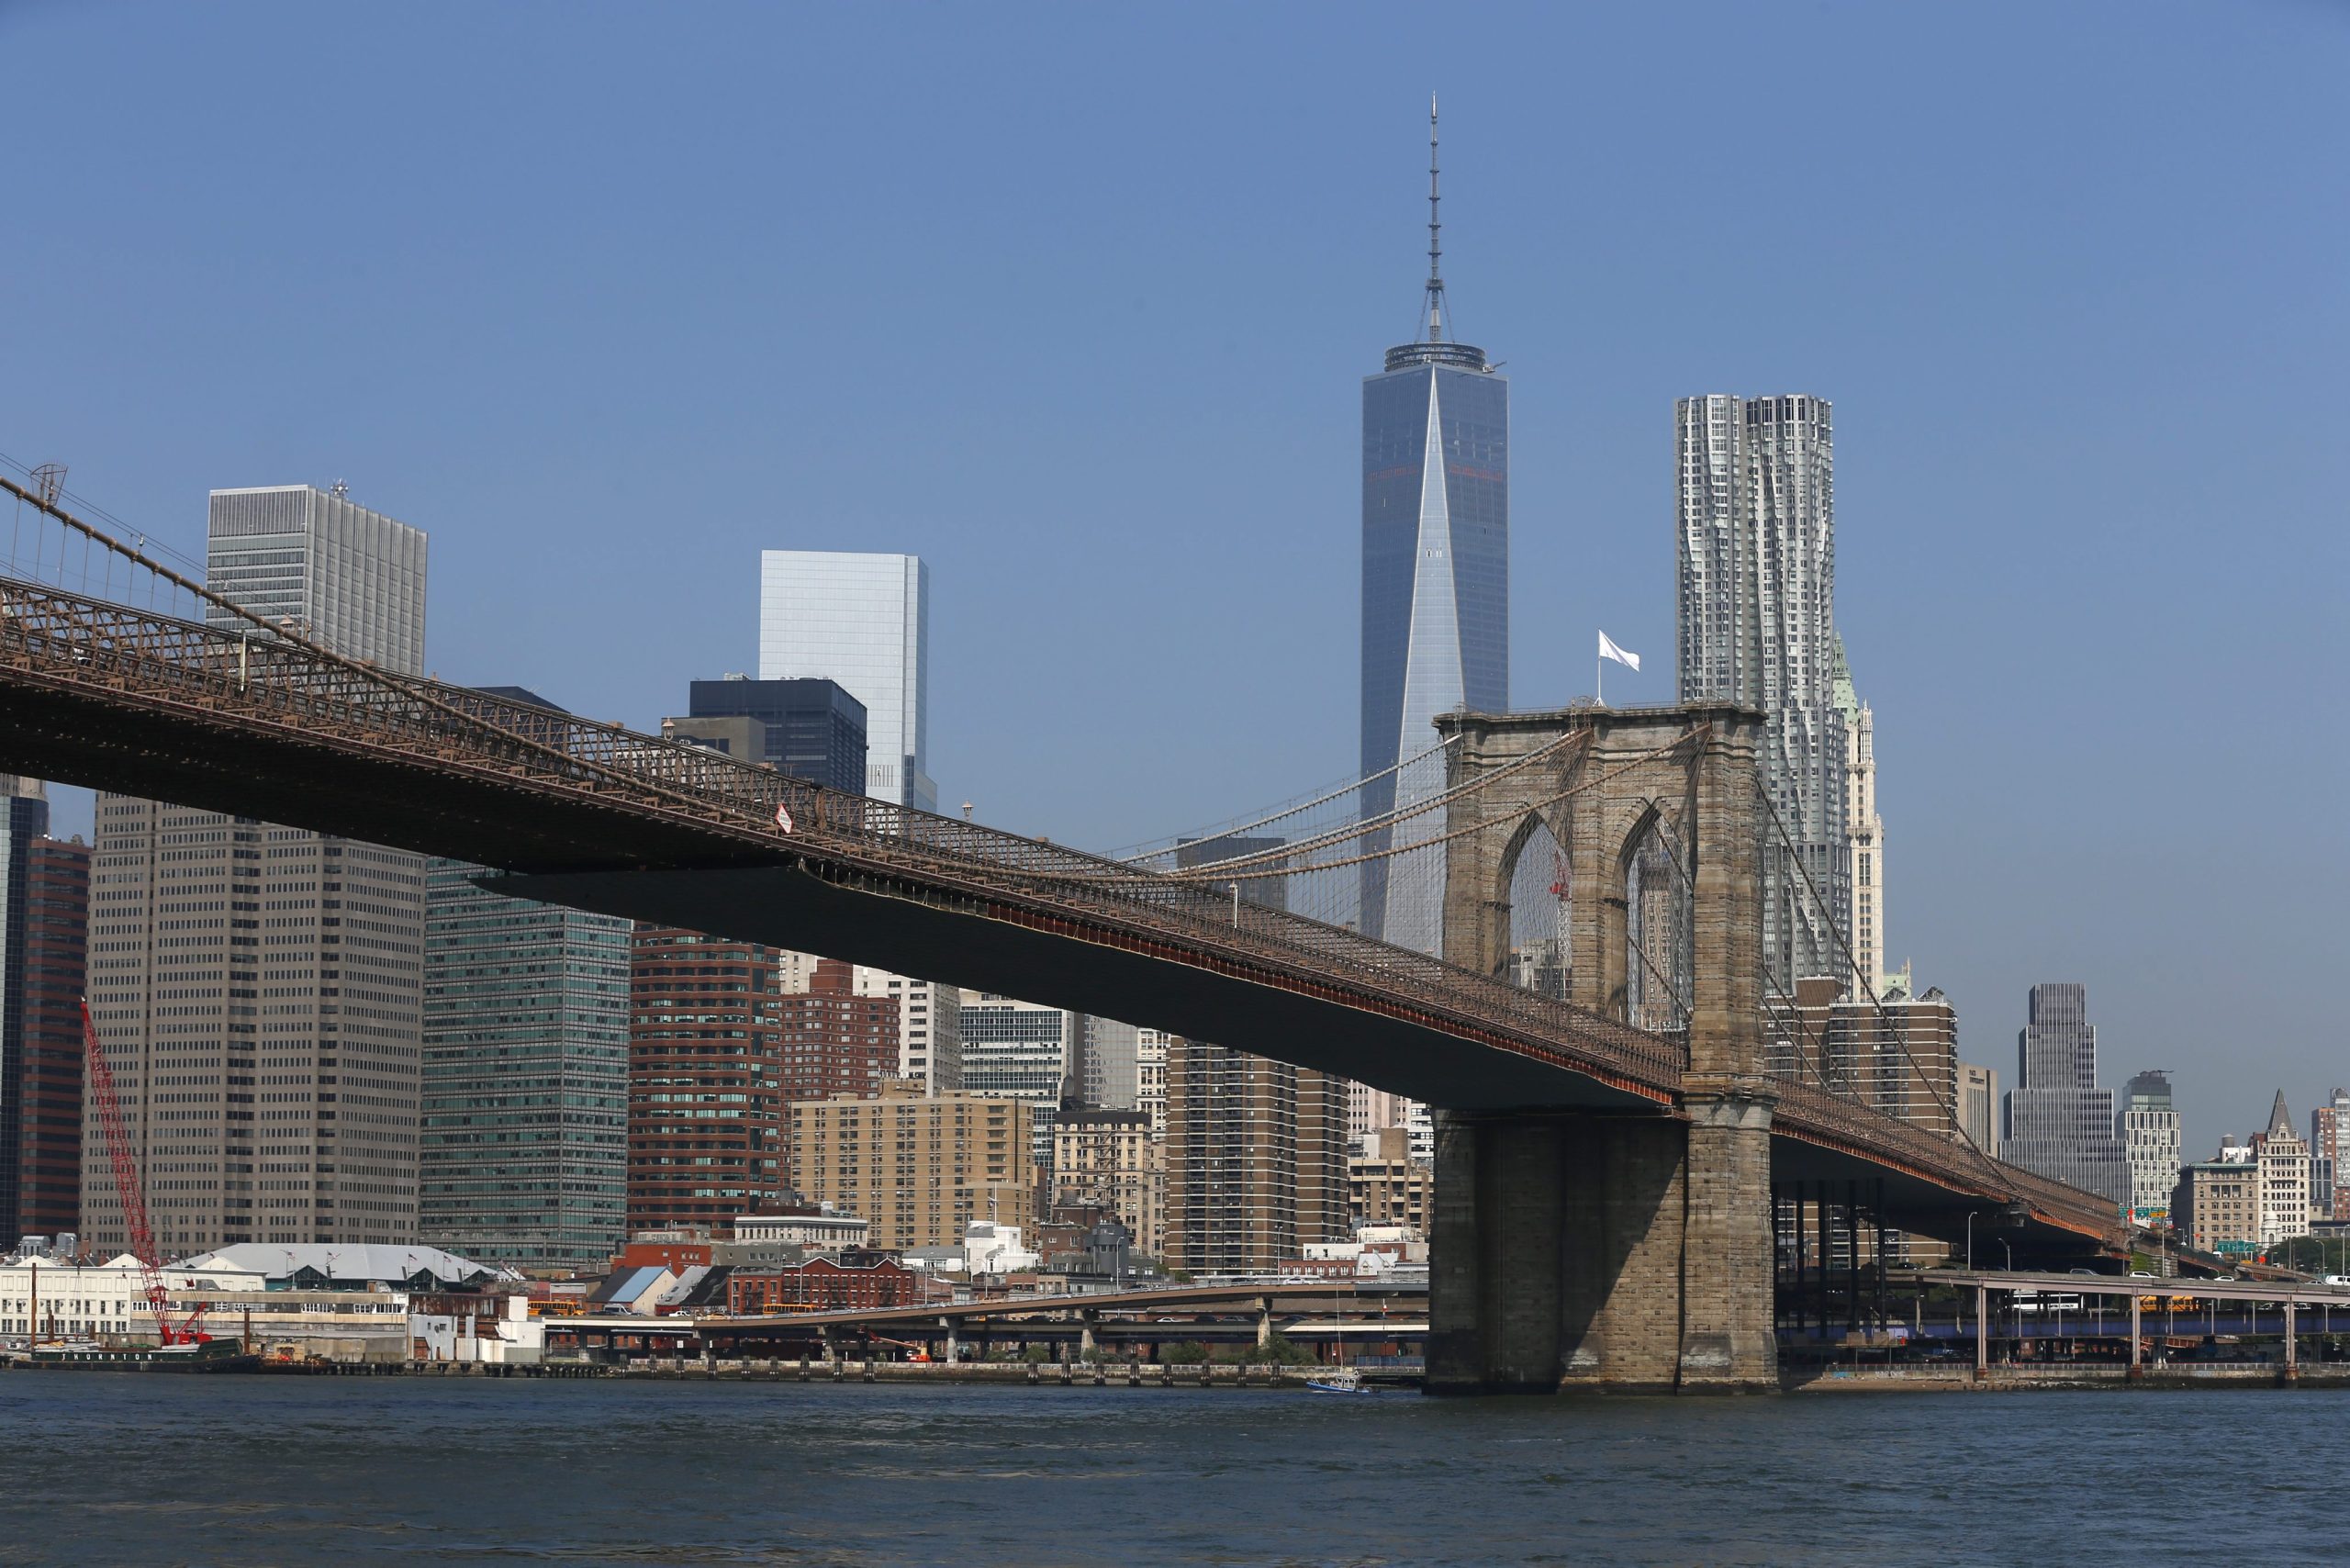 O mistério das bandeiras brancas na Ponte de Brooklyn